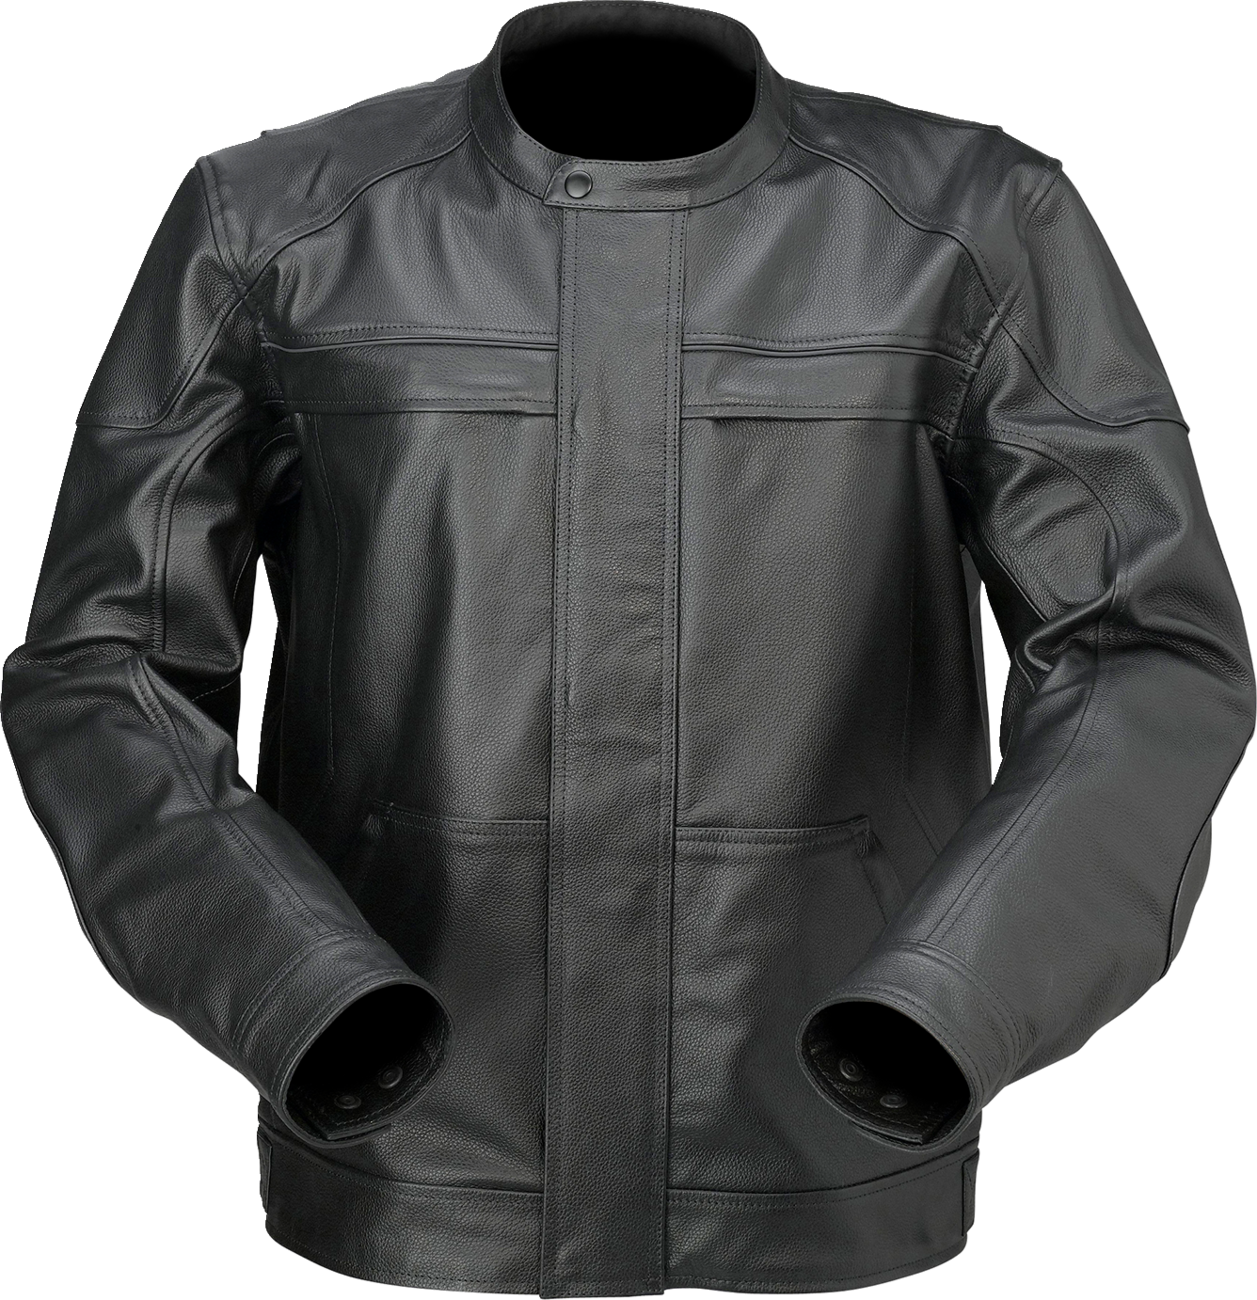 Z1R Justifier Leather Jacket - Black - Small 2810-3912